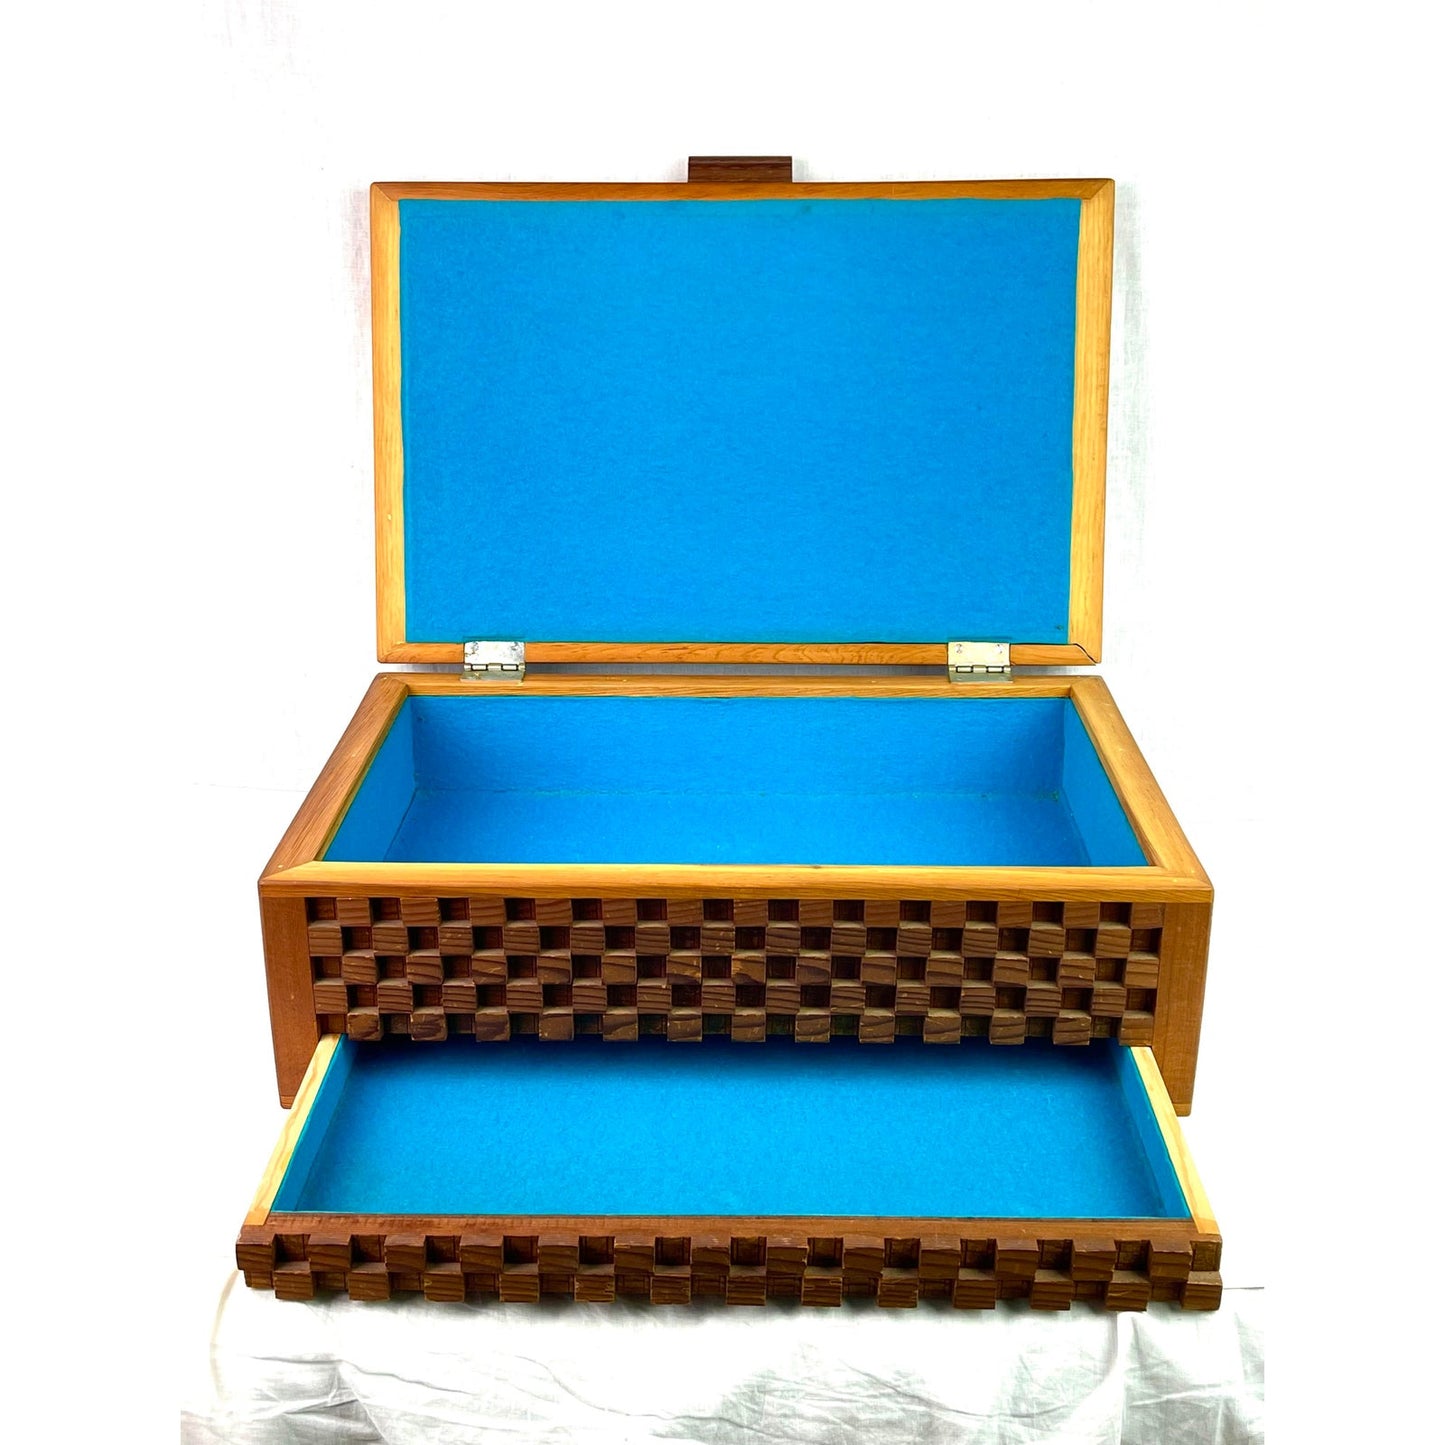 Checkerboard Carved Gucci Style Walnut Wood Storage Box